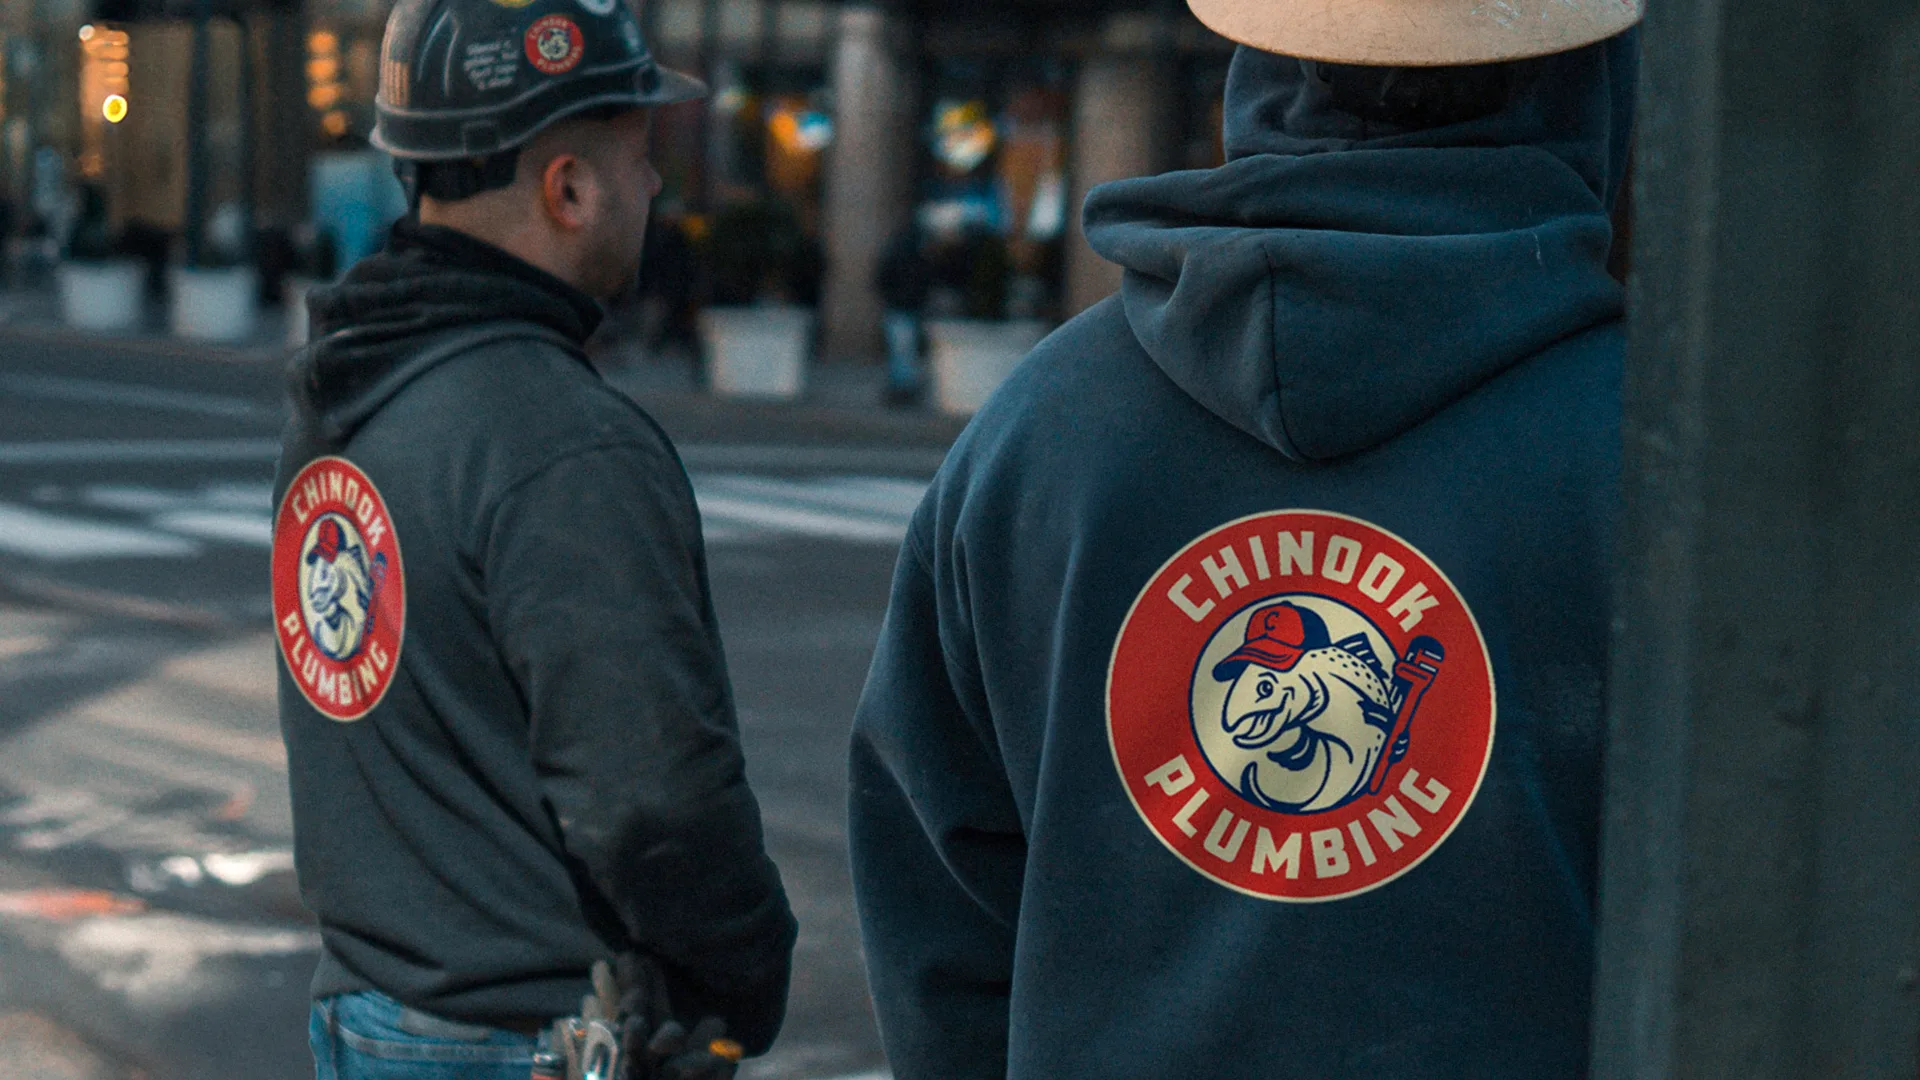 Chinook Plumbing plumbers wearing new branded hoodies and helmets with chinook plumbing logos